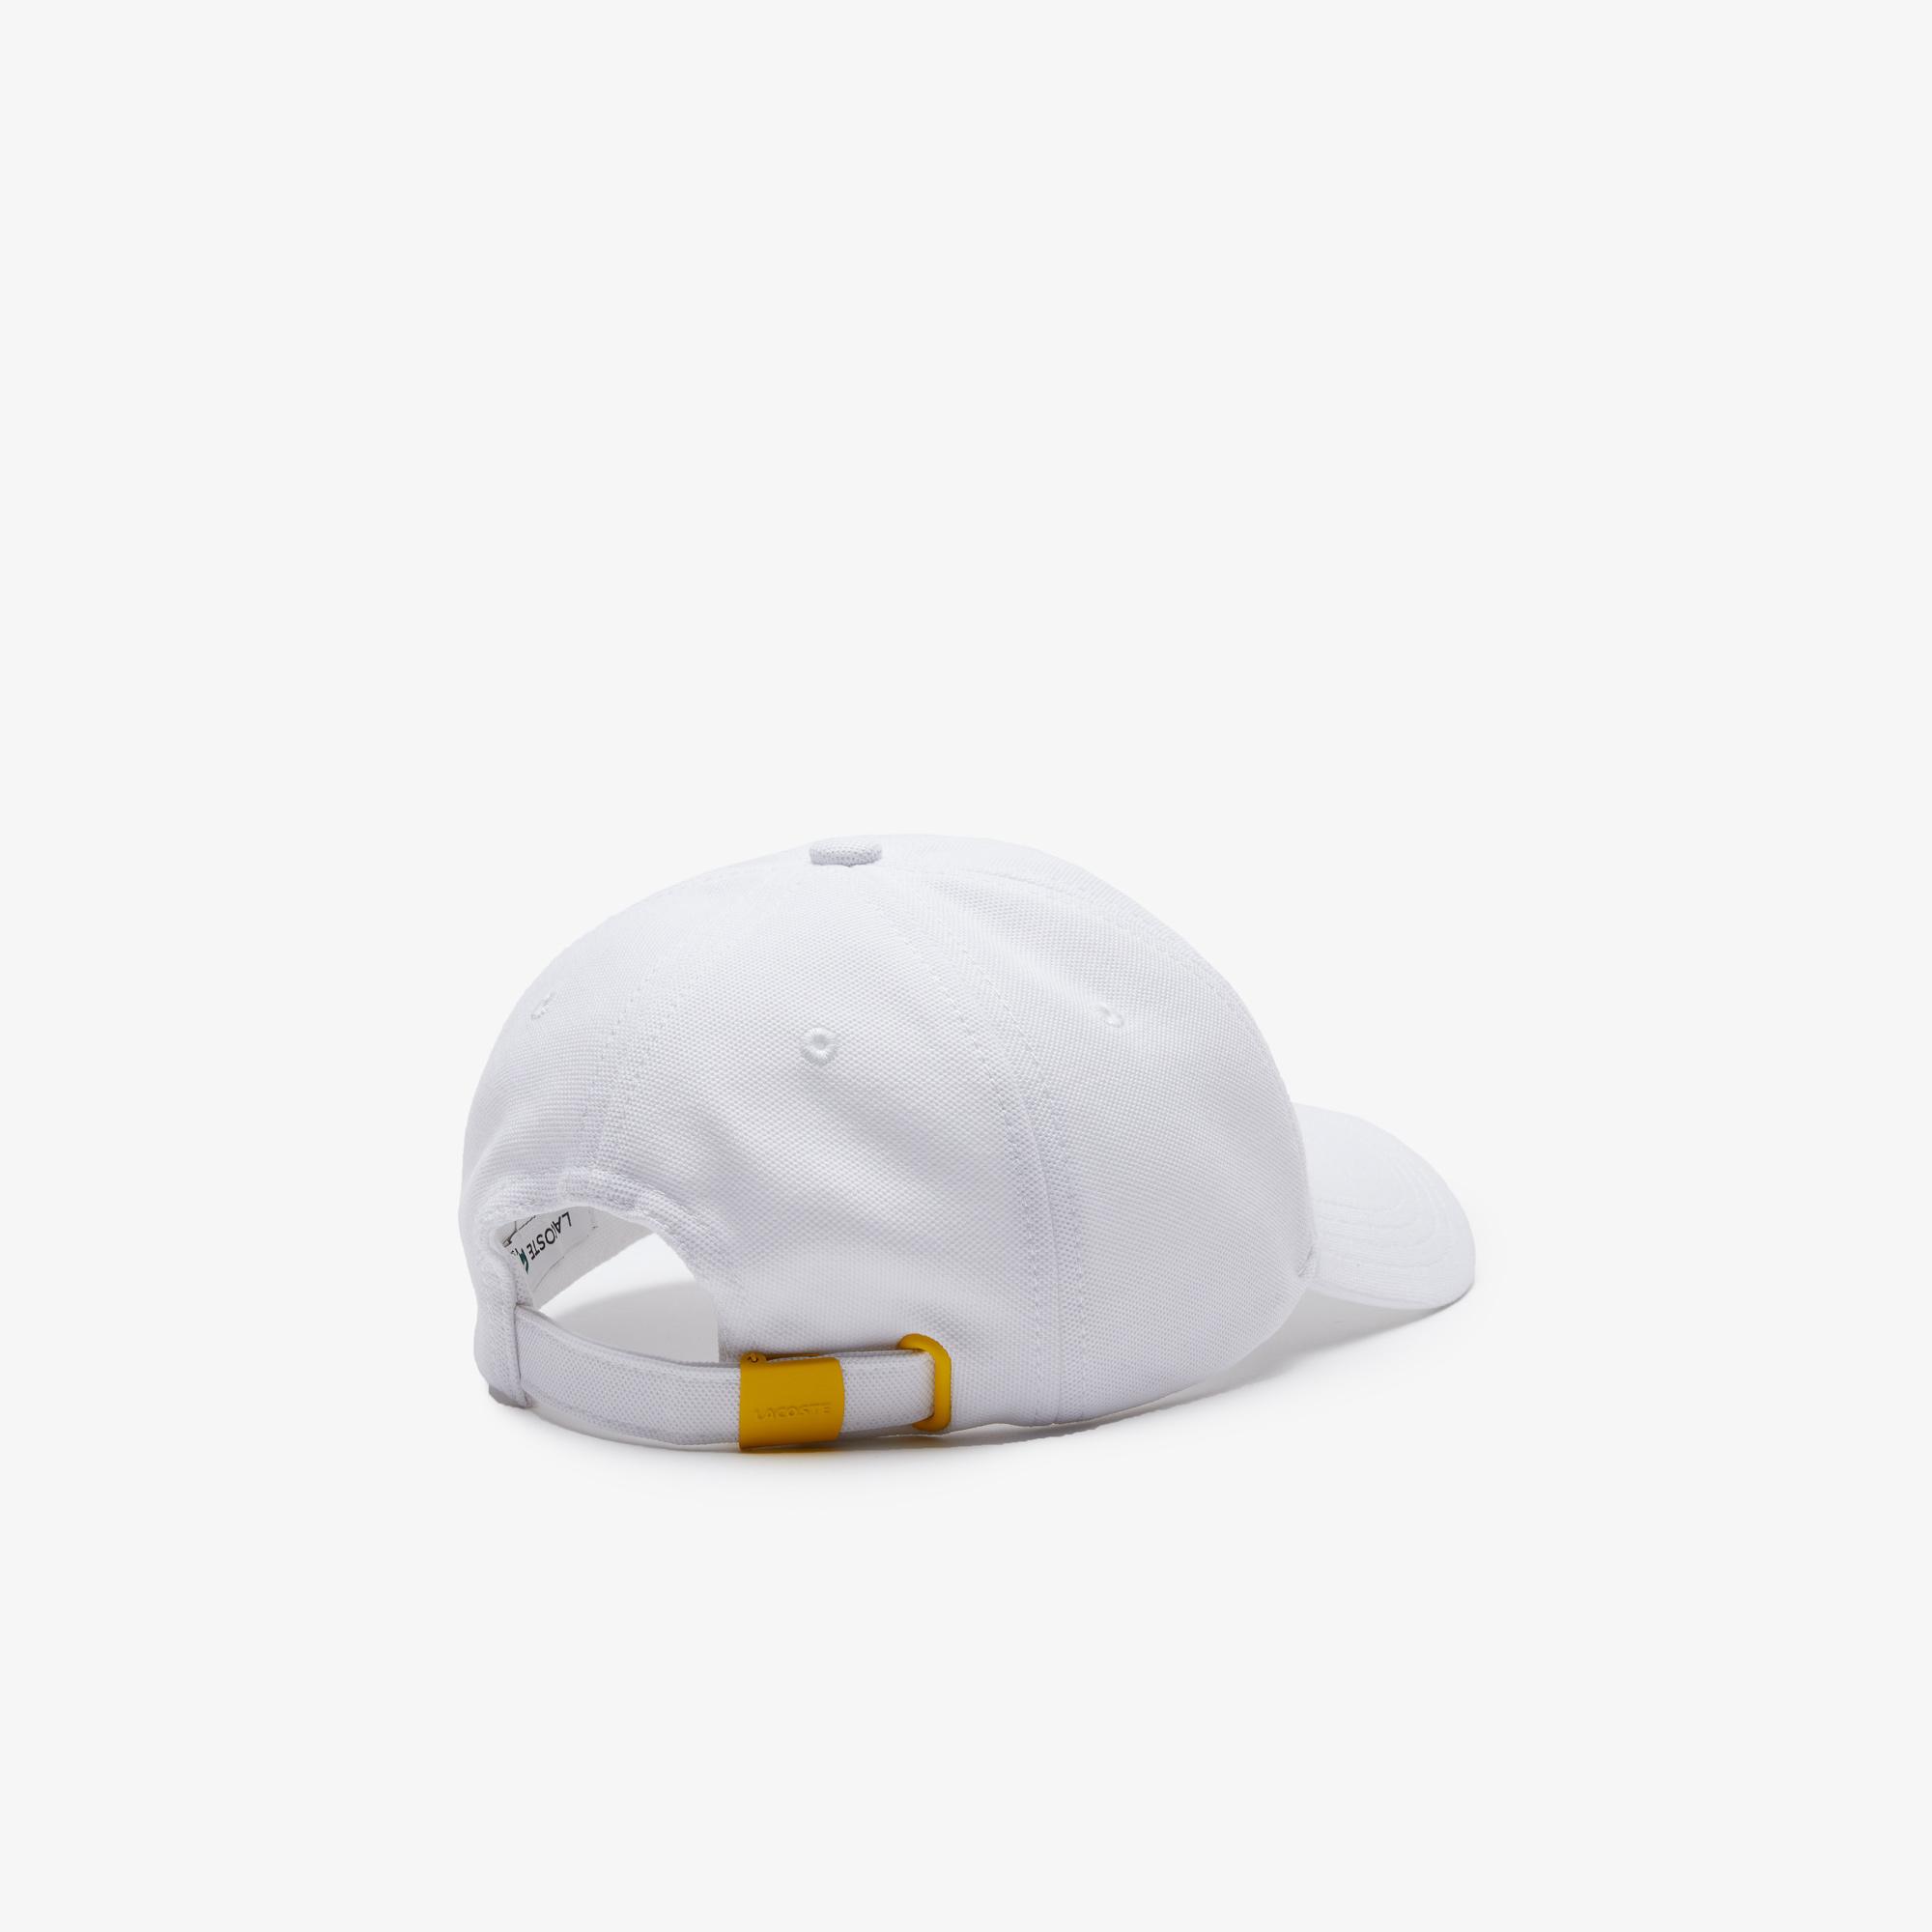 Lacoste x National Geographic Unisex Beyaz Şapka. 5